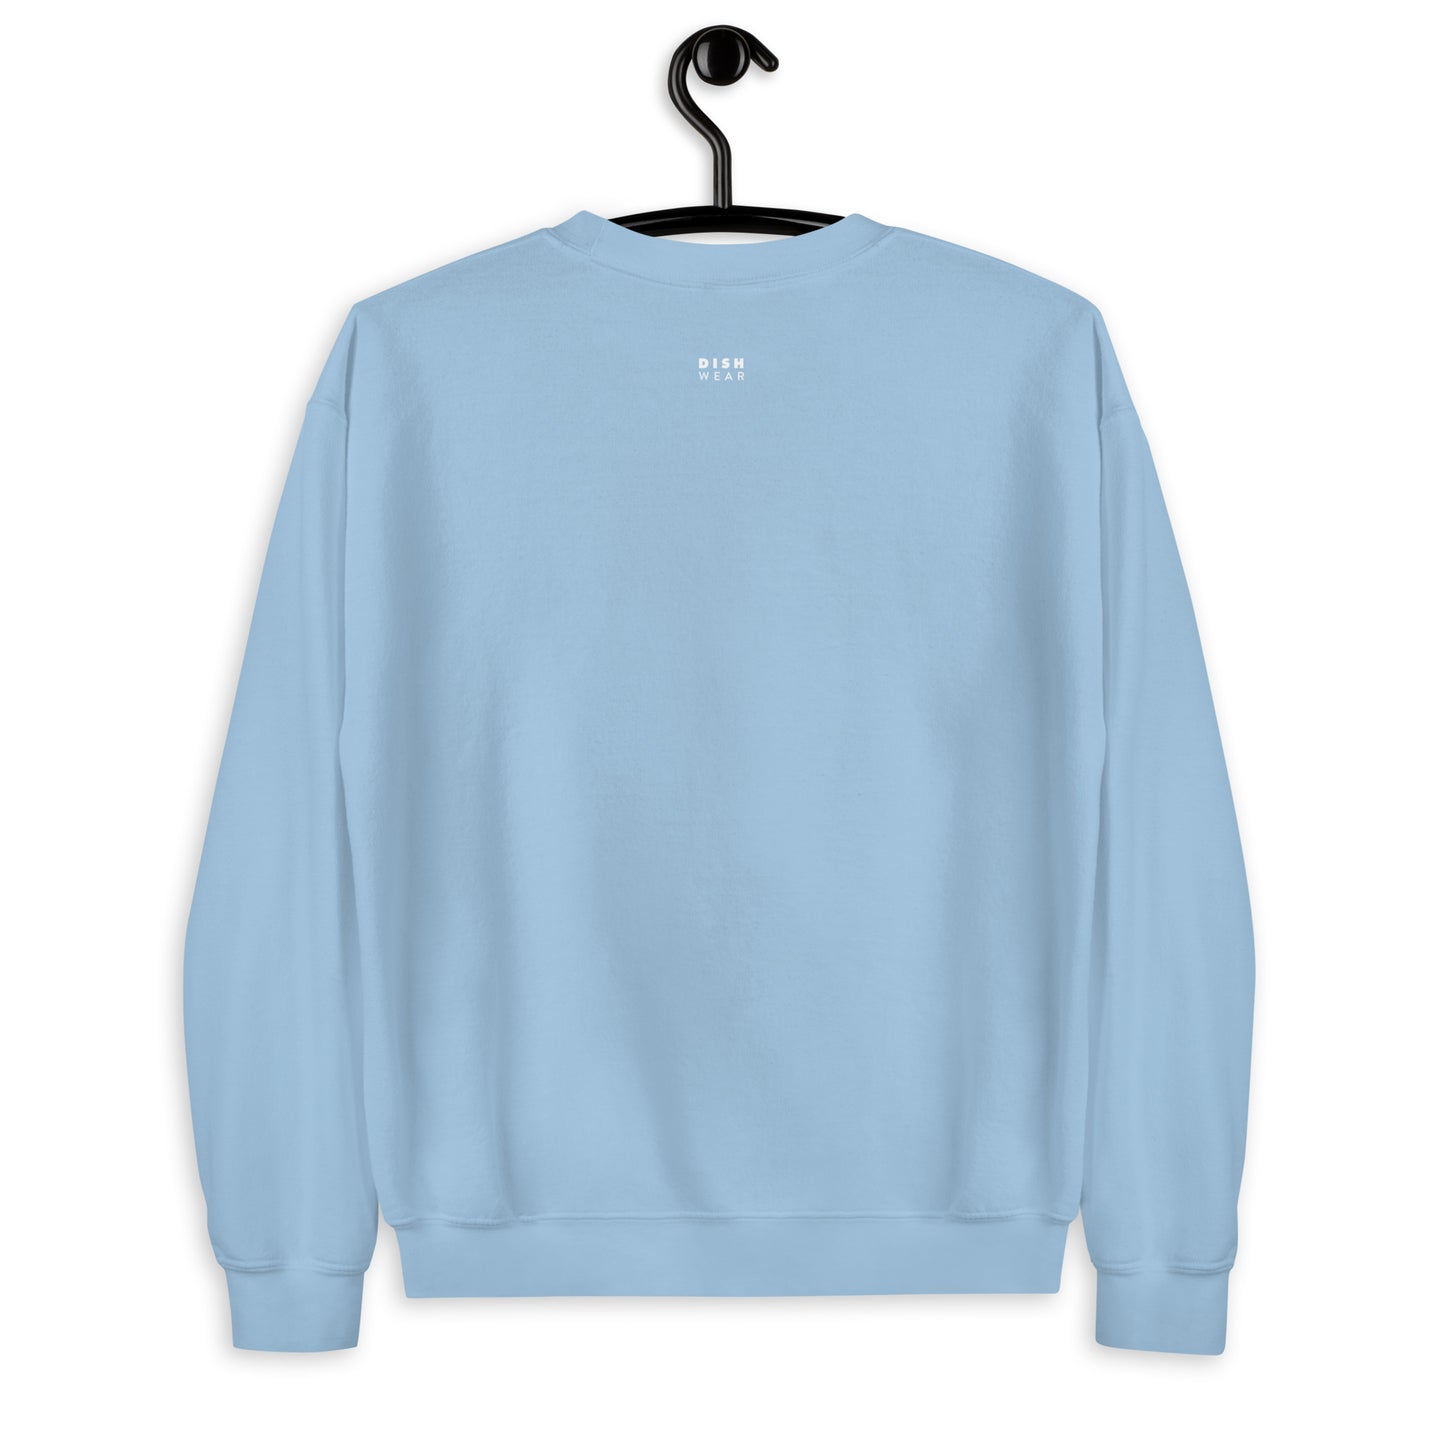 Mayo Sweatshirt - Arched Font